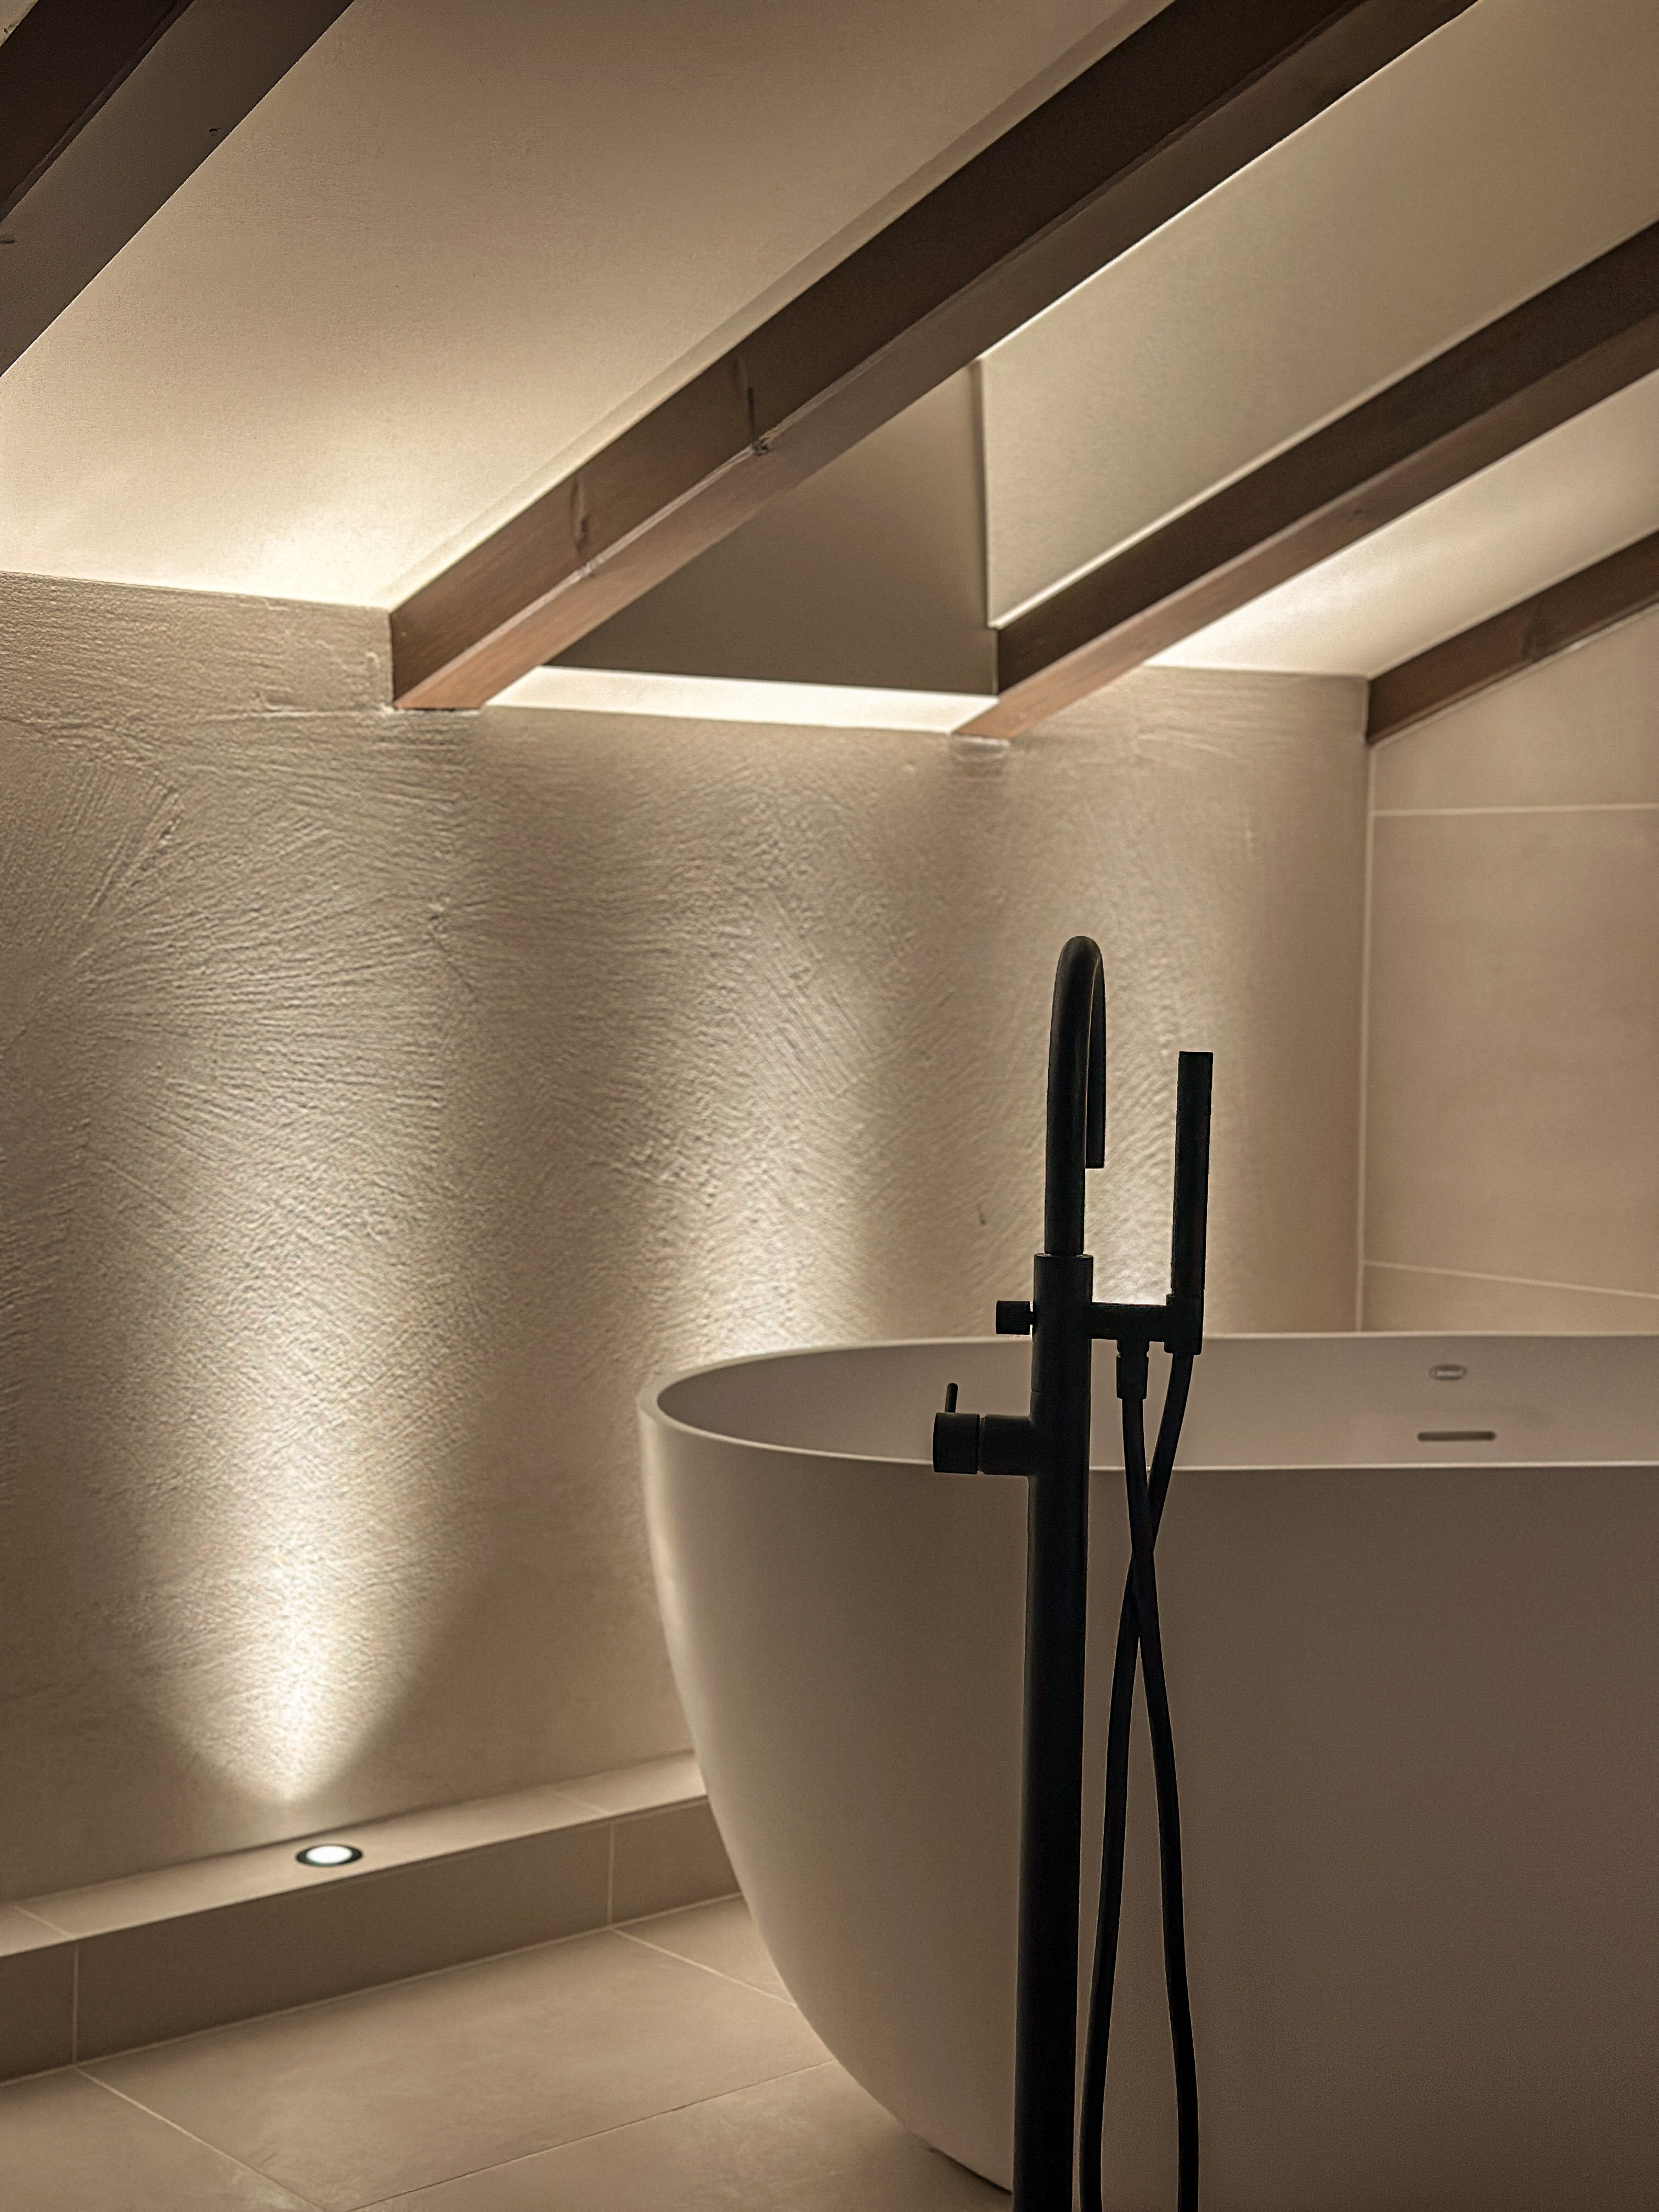 Recessed floor spotlights in the bathroom for ambient lighting